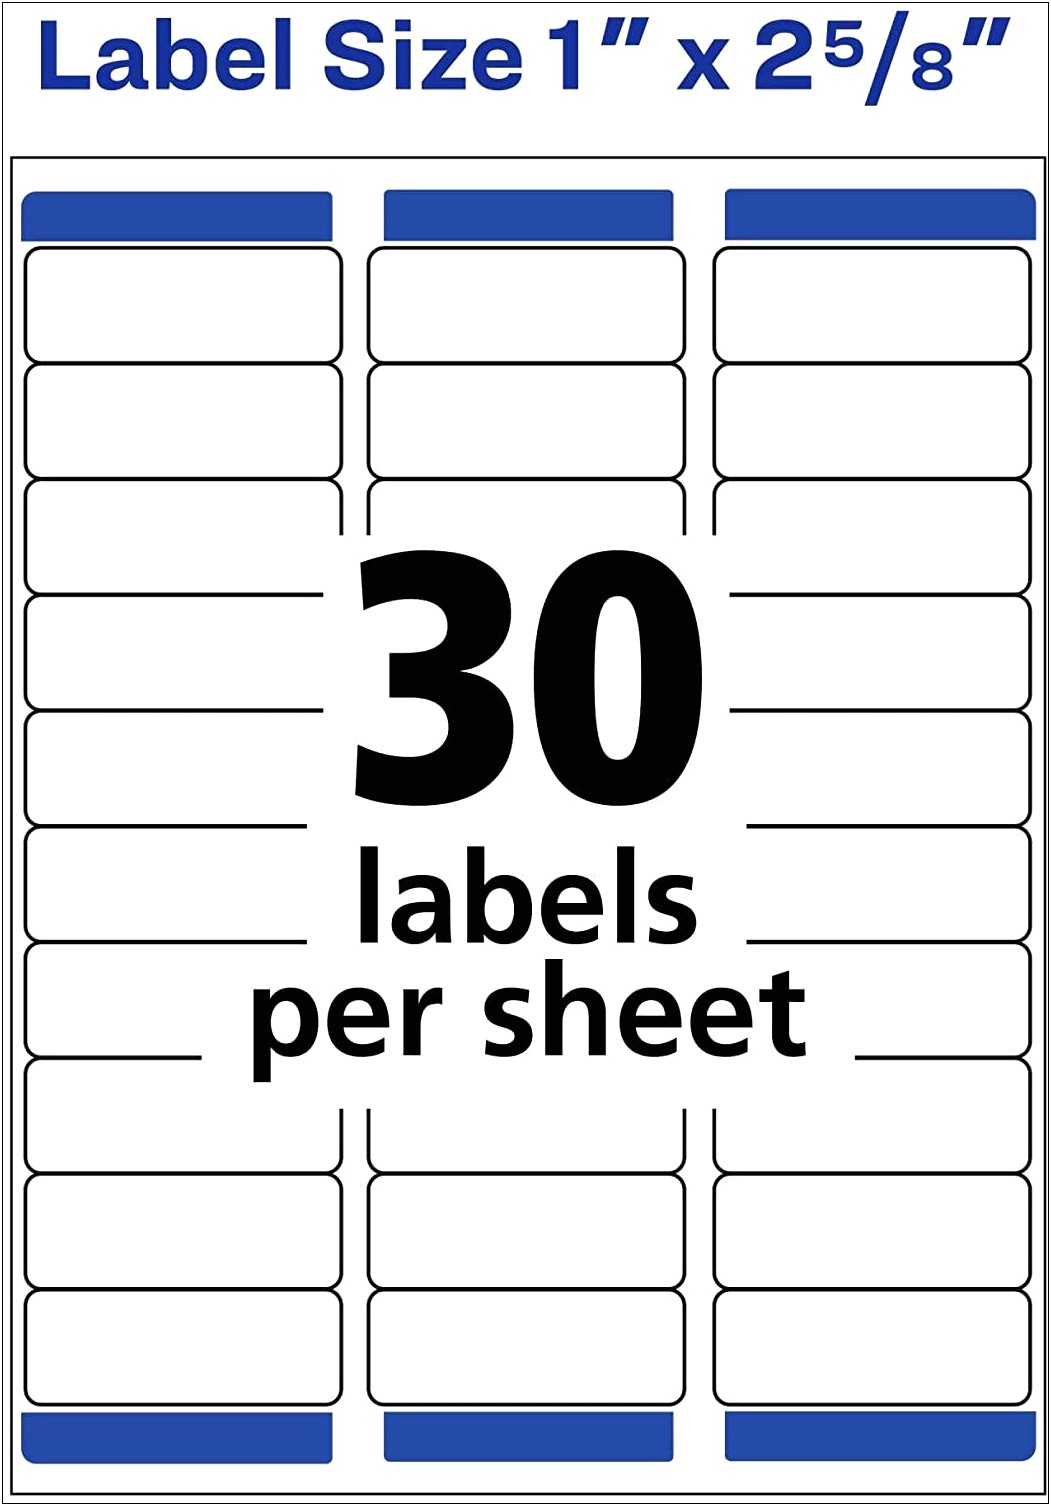 Return Address Label Template Word 30 Per Sheet